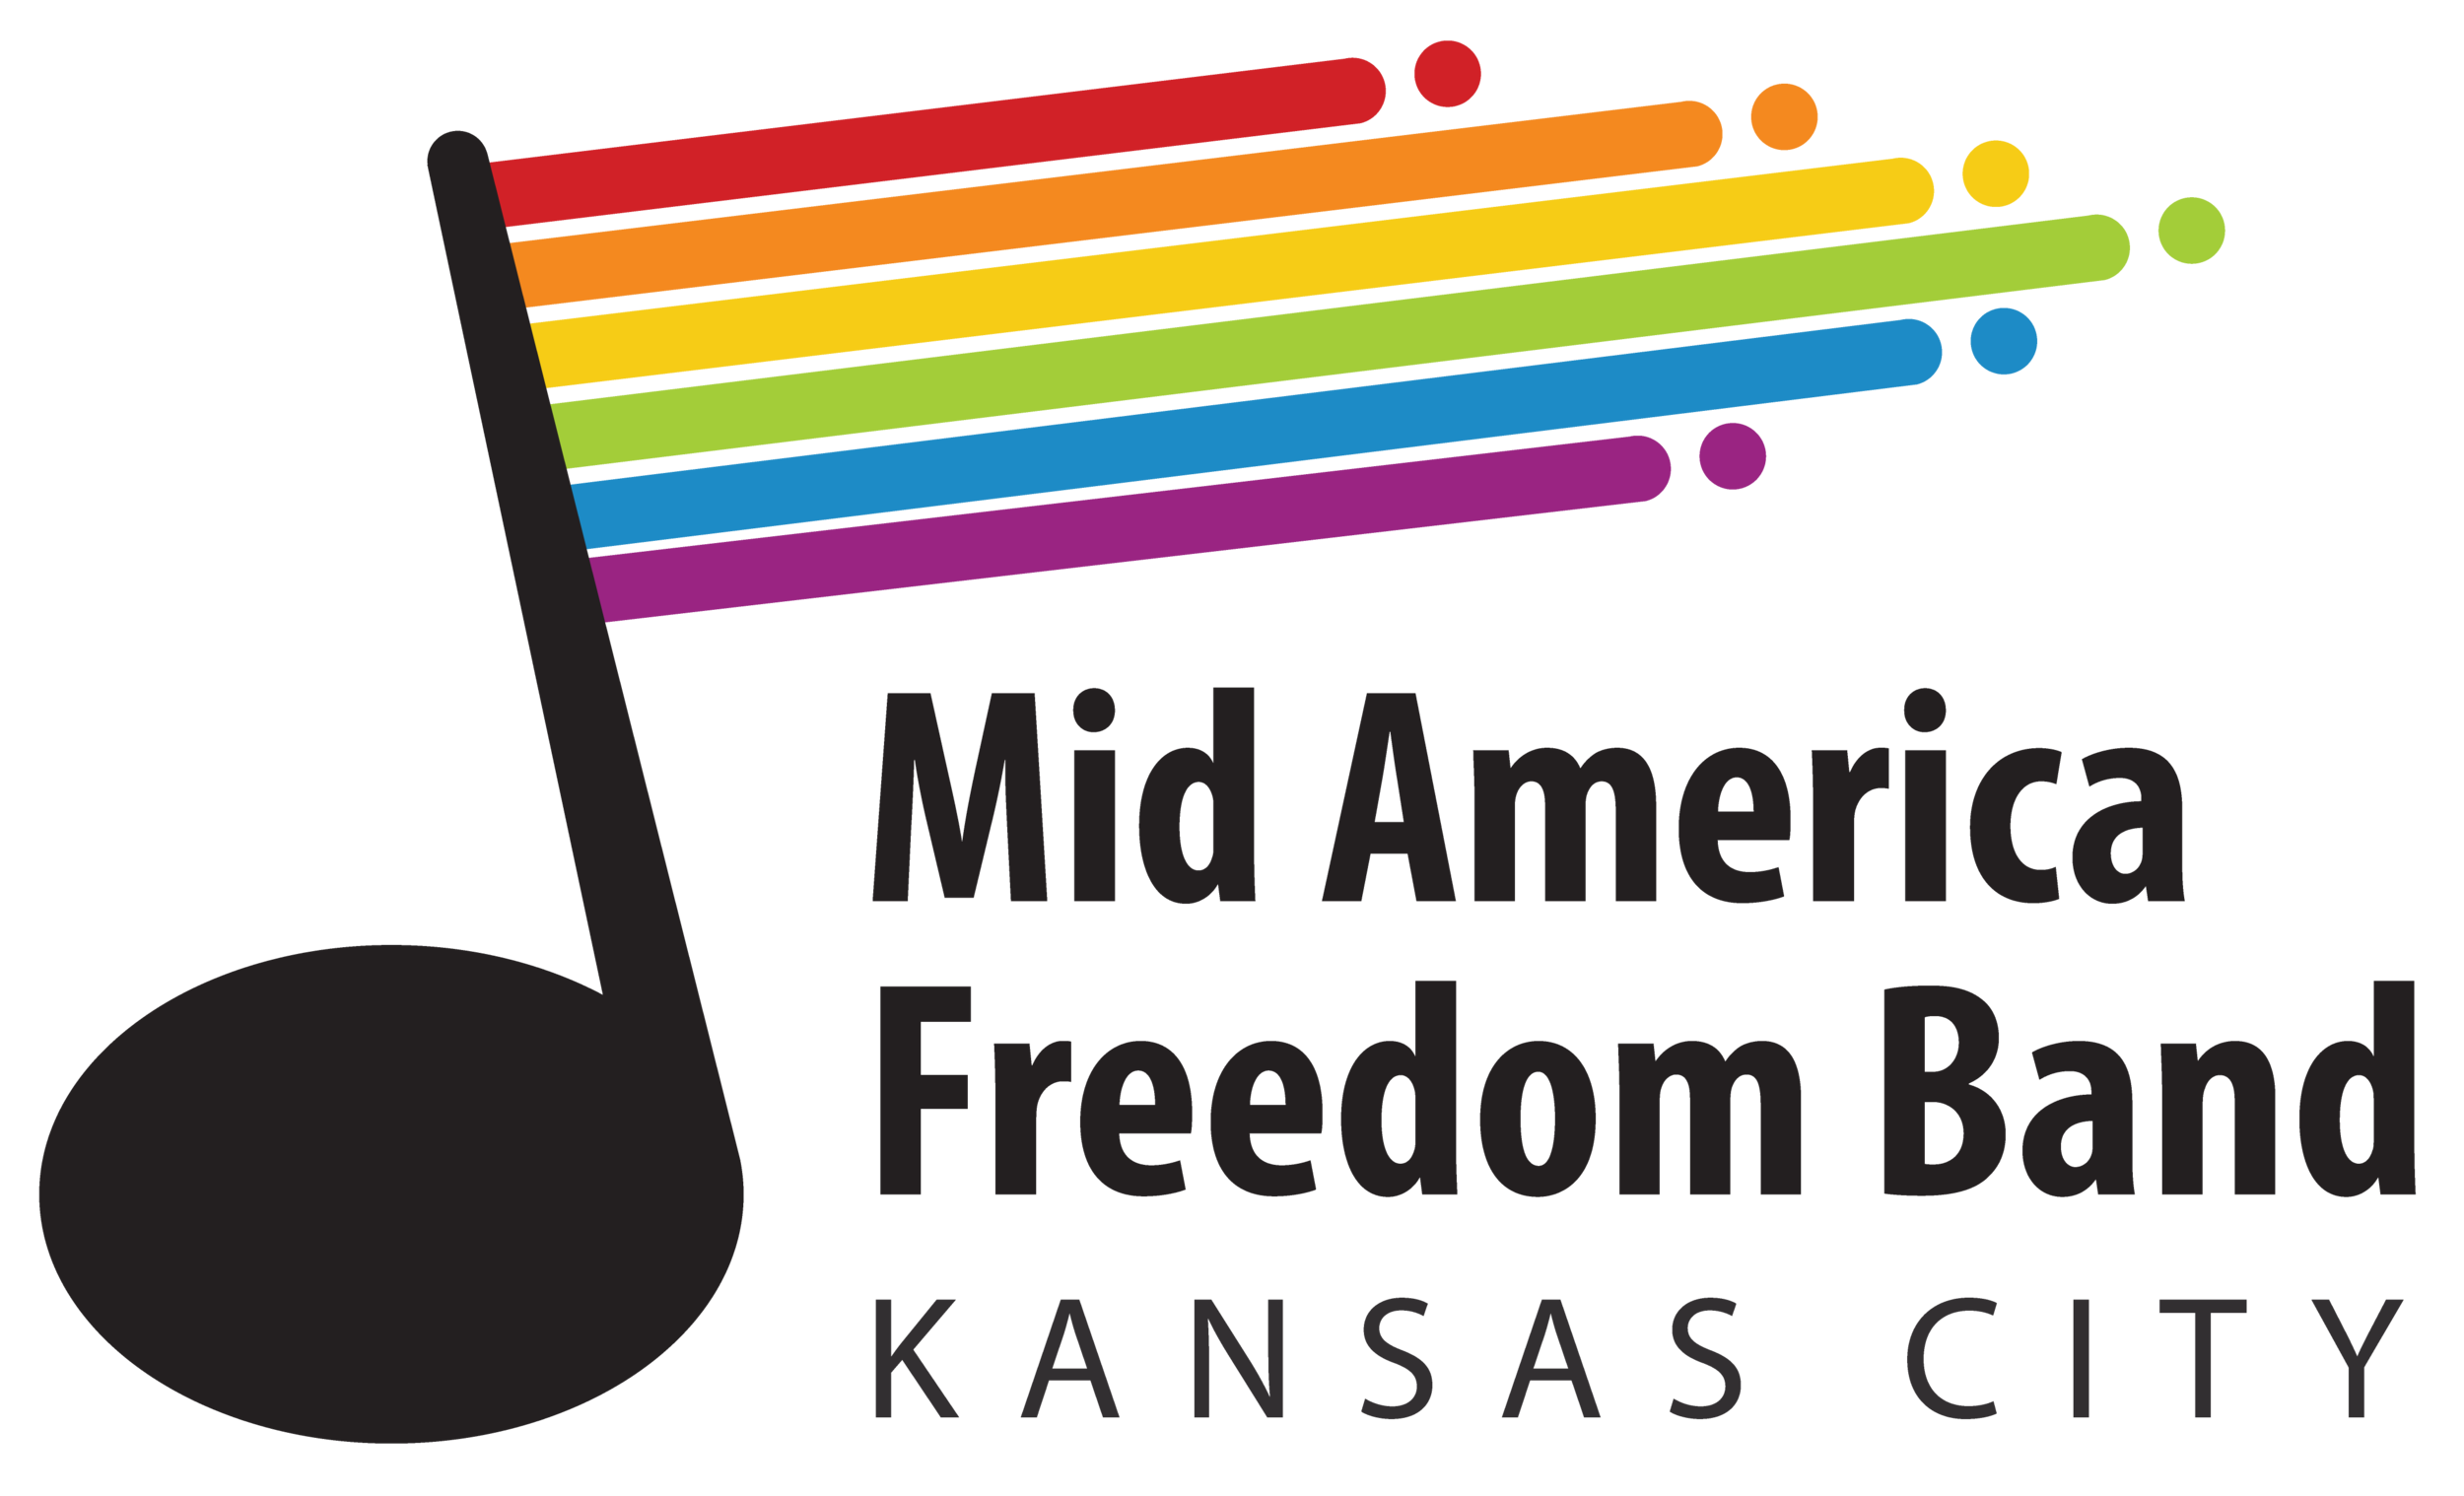 Mid America Freedom Band